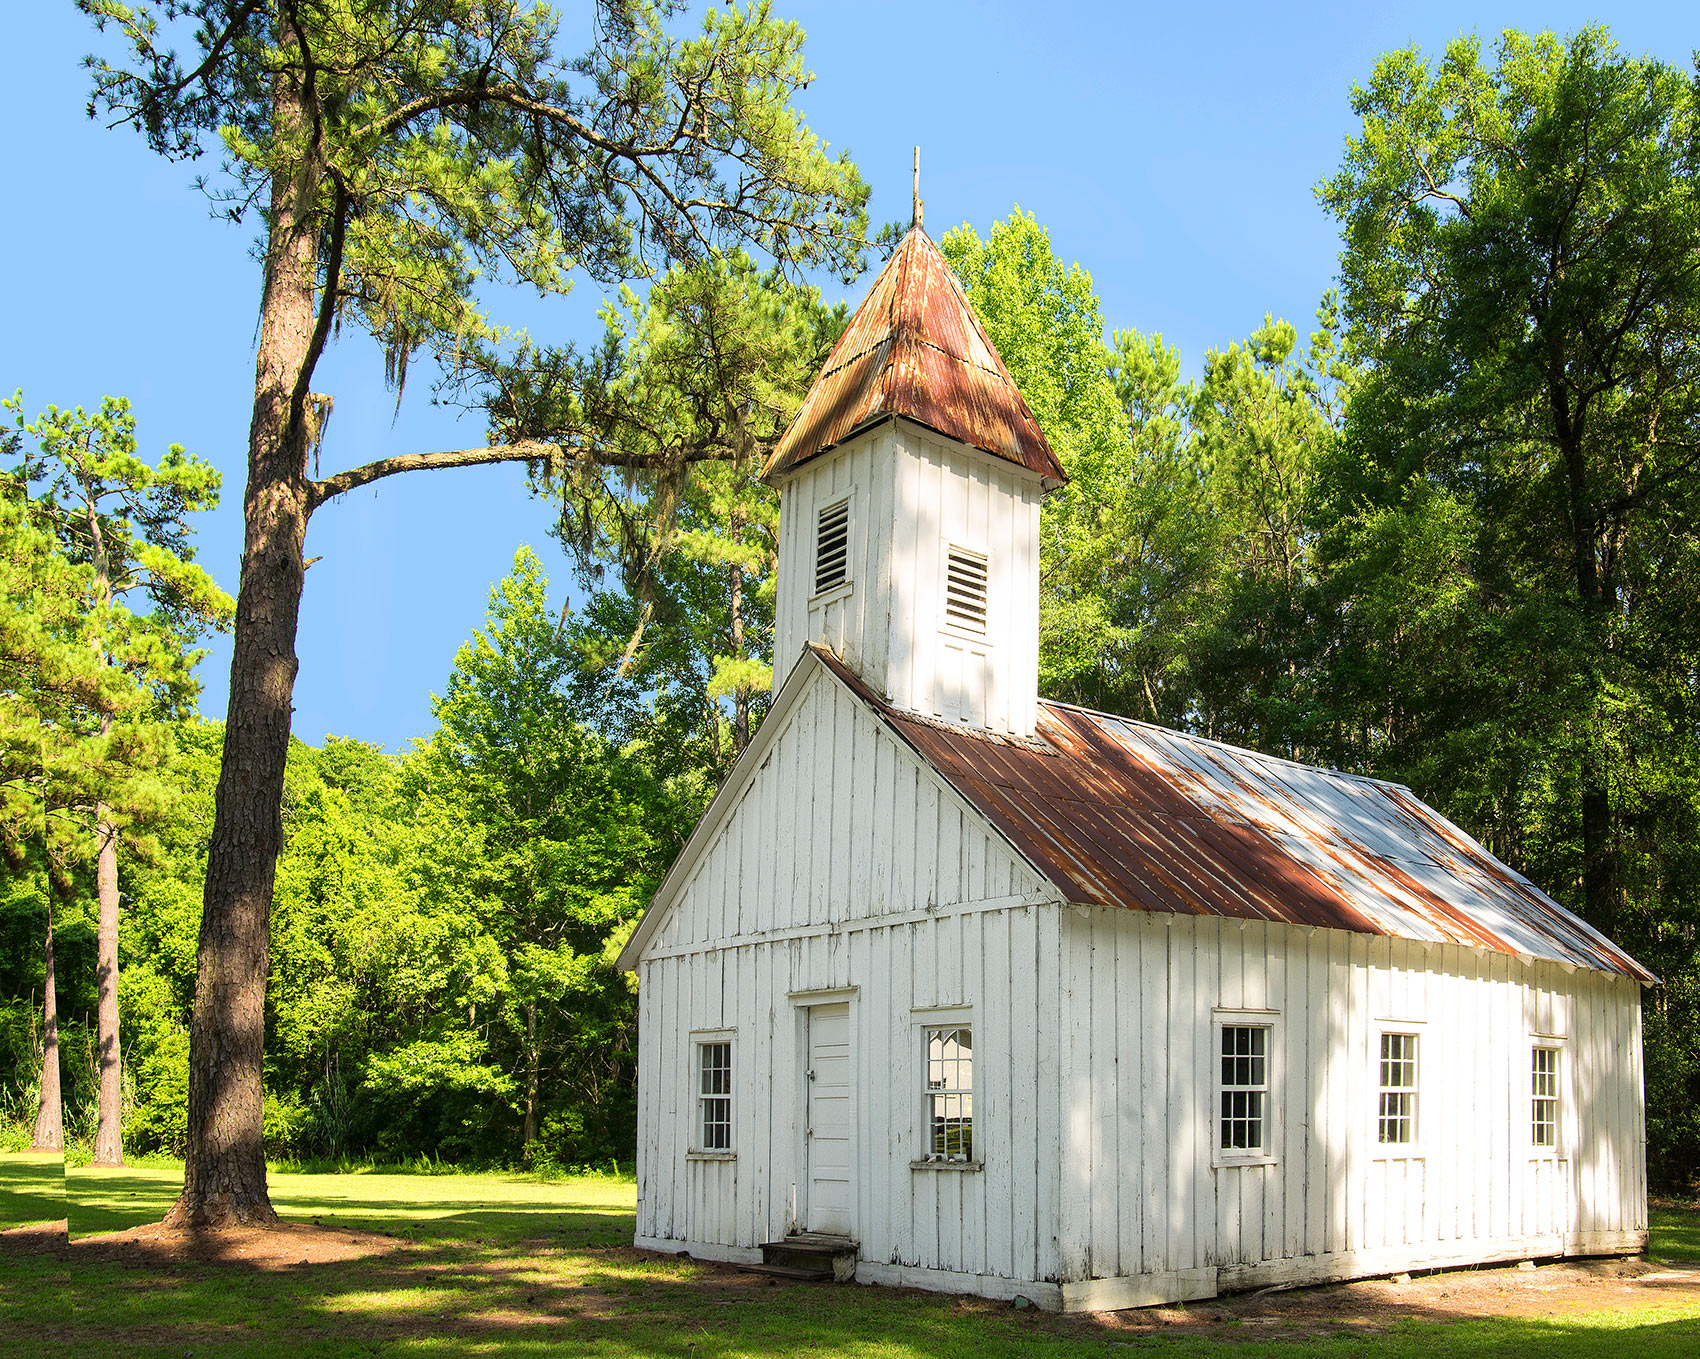 A wooden church in Friendfield Village